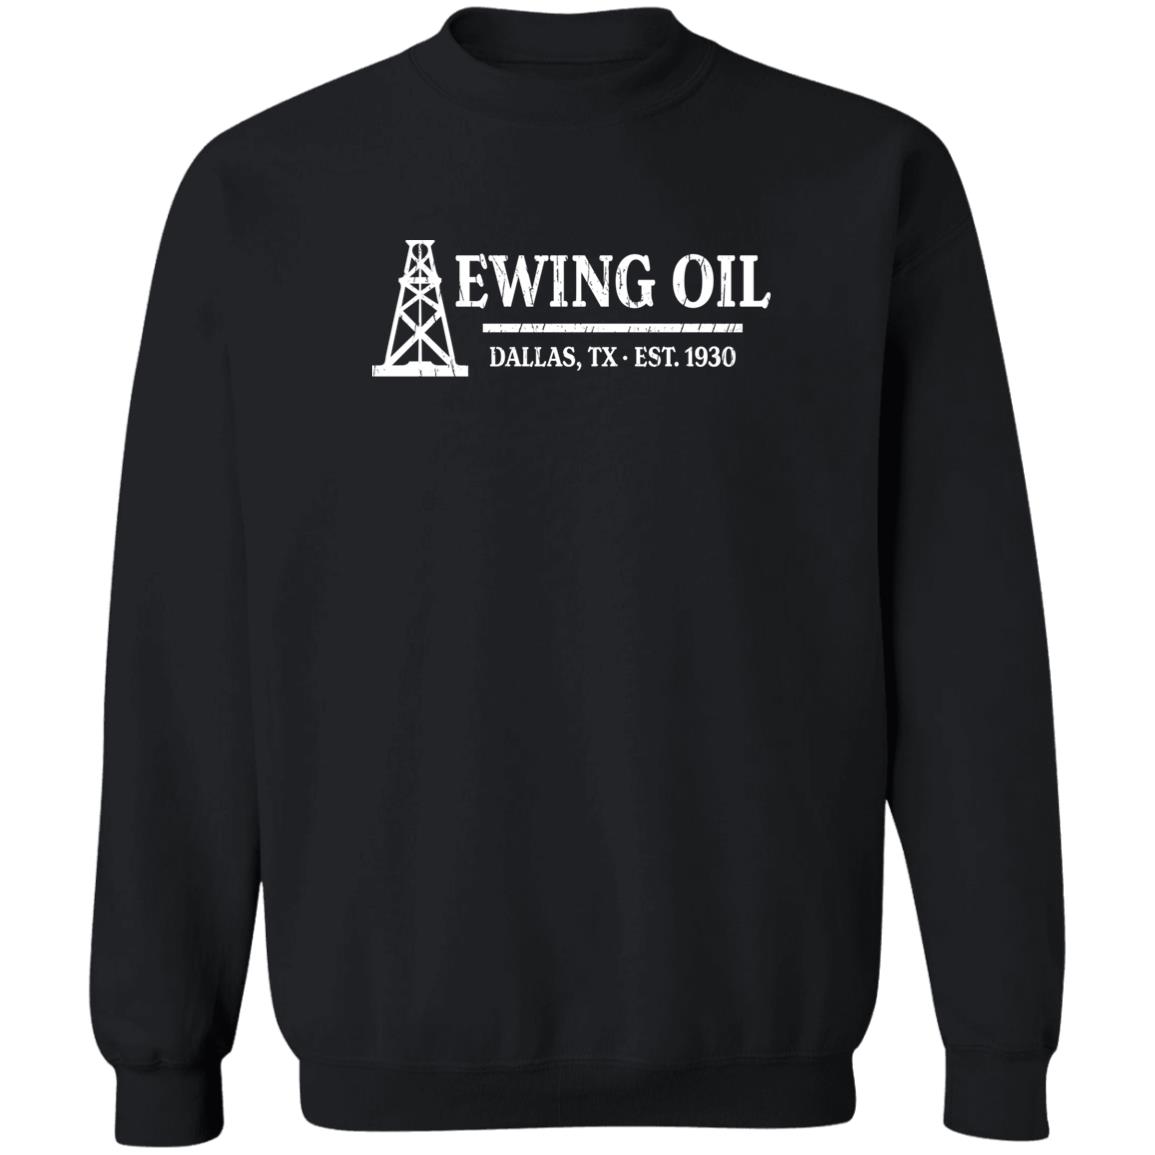 Ewing Oil Dallas Tx Est 1930 Shirt 2